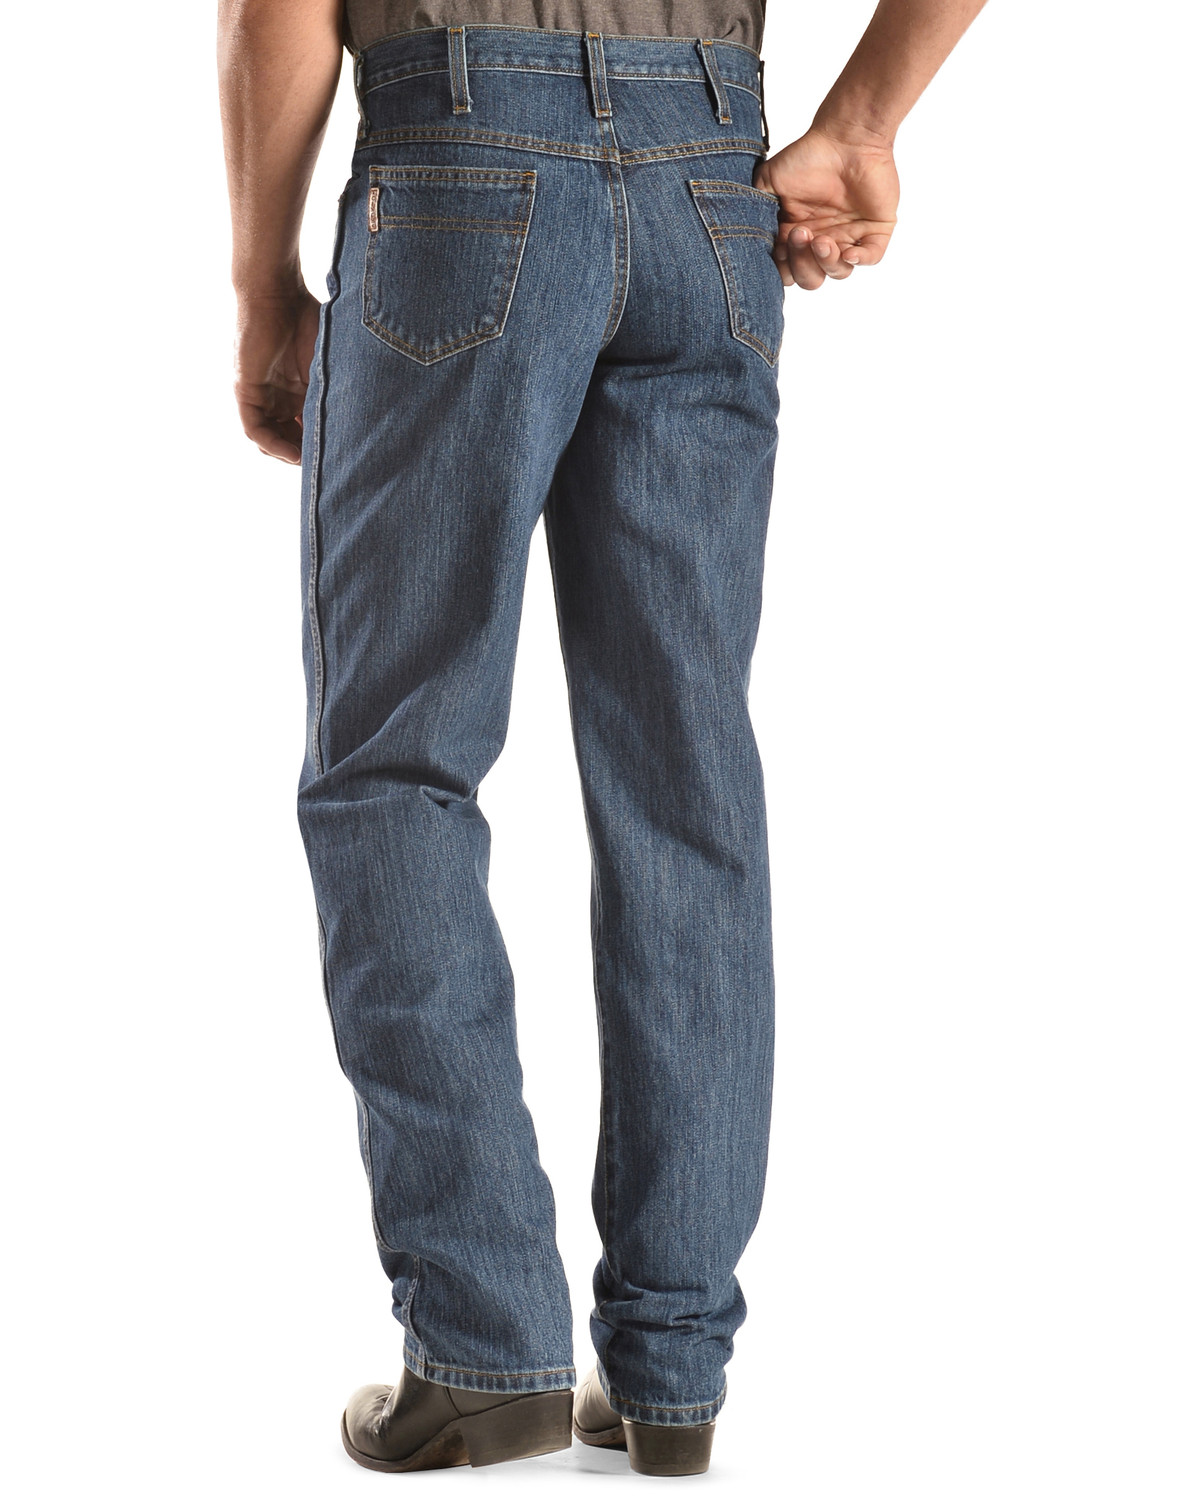 Cinch Jeans - Green Label Original Fit - 38